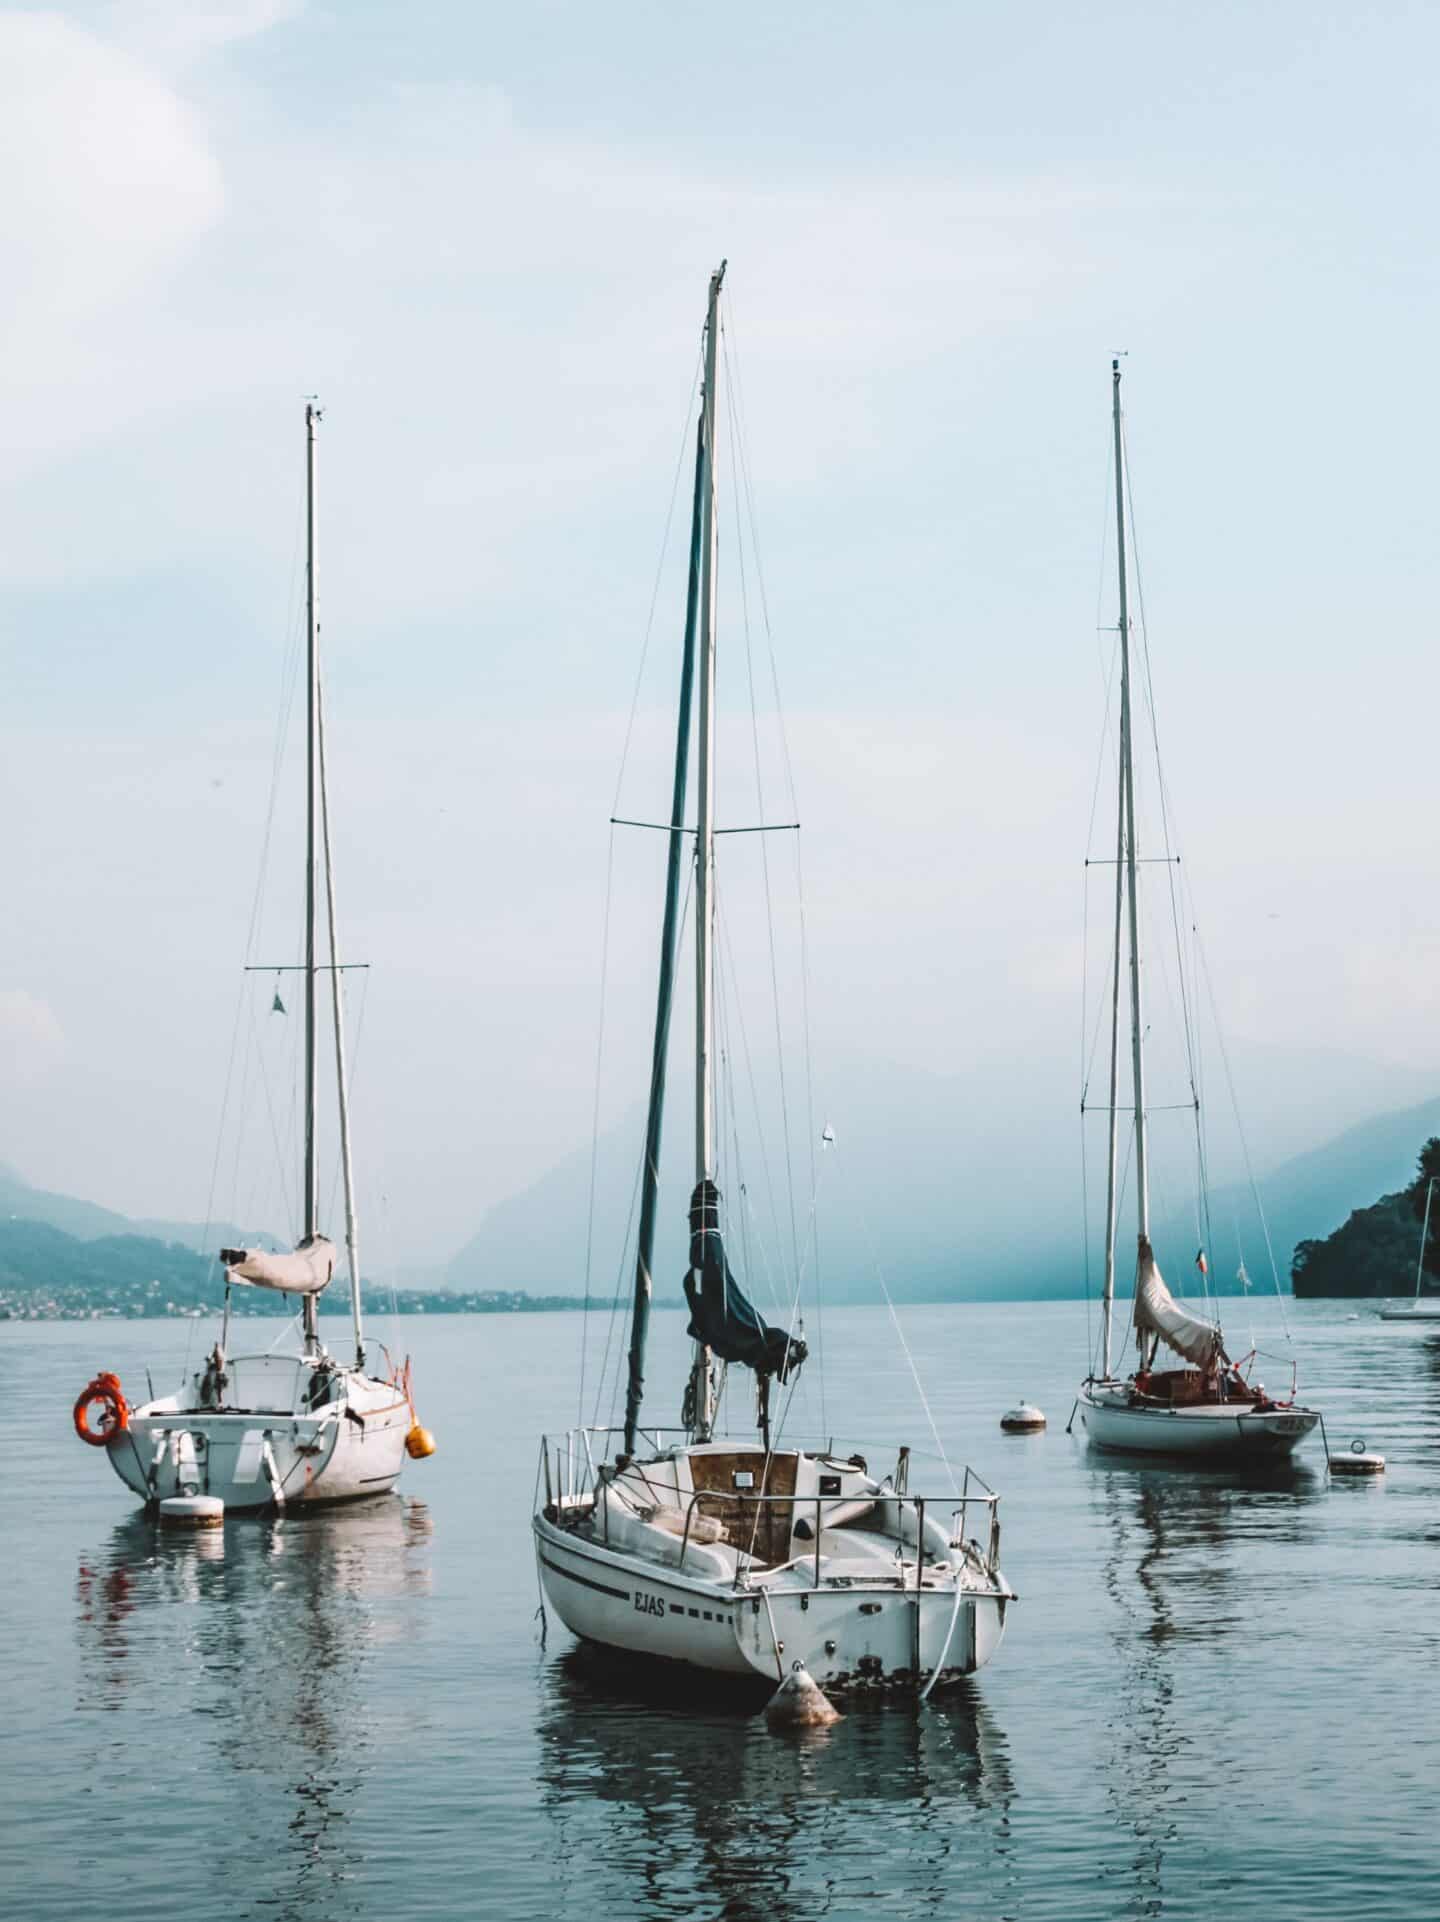 Sailboats in Pescallo Fishing Village in Lake Como in October